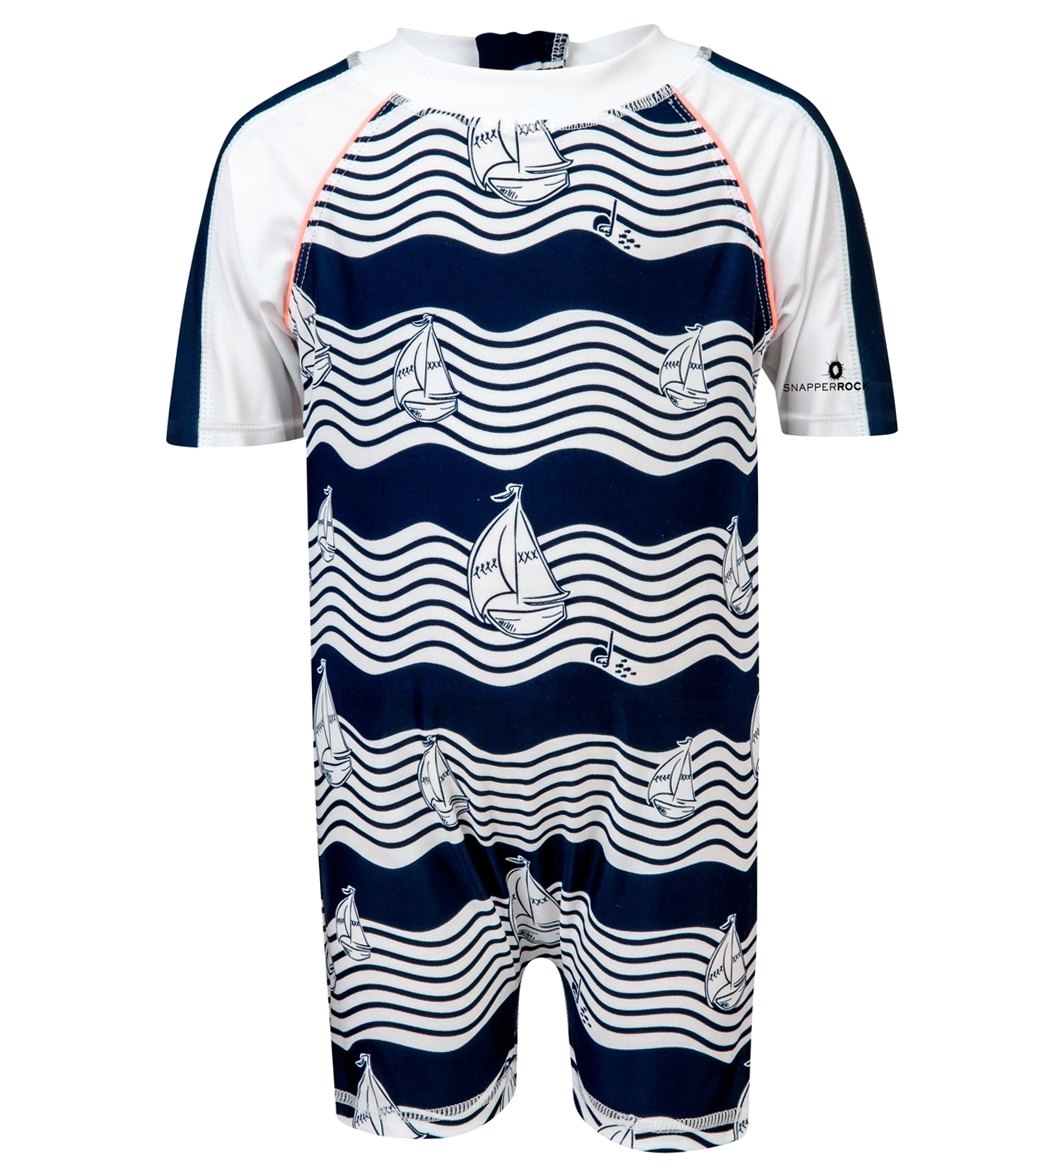 Snapper Rock Boys' Short Sleeve Sunsuit Baby - Navy/White/Multi 0-06M - Swimoutlet.com